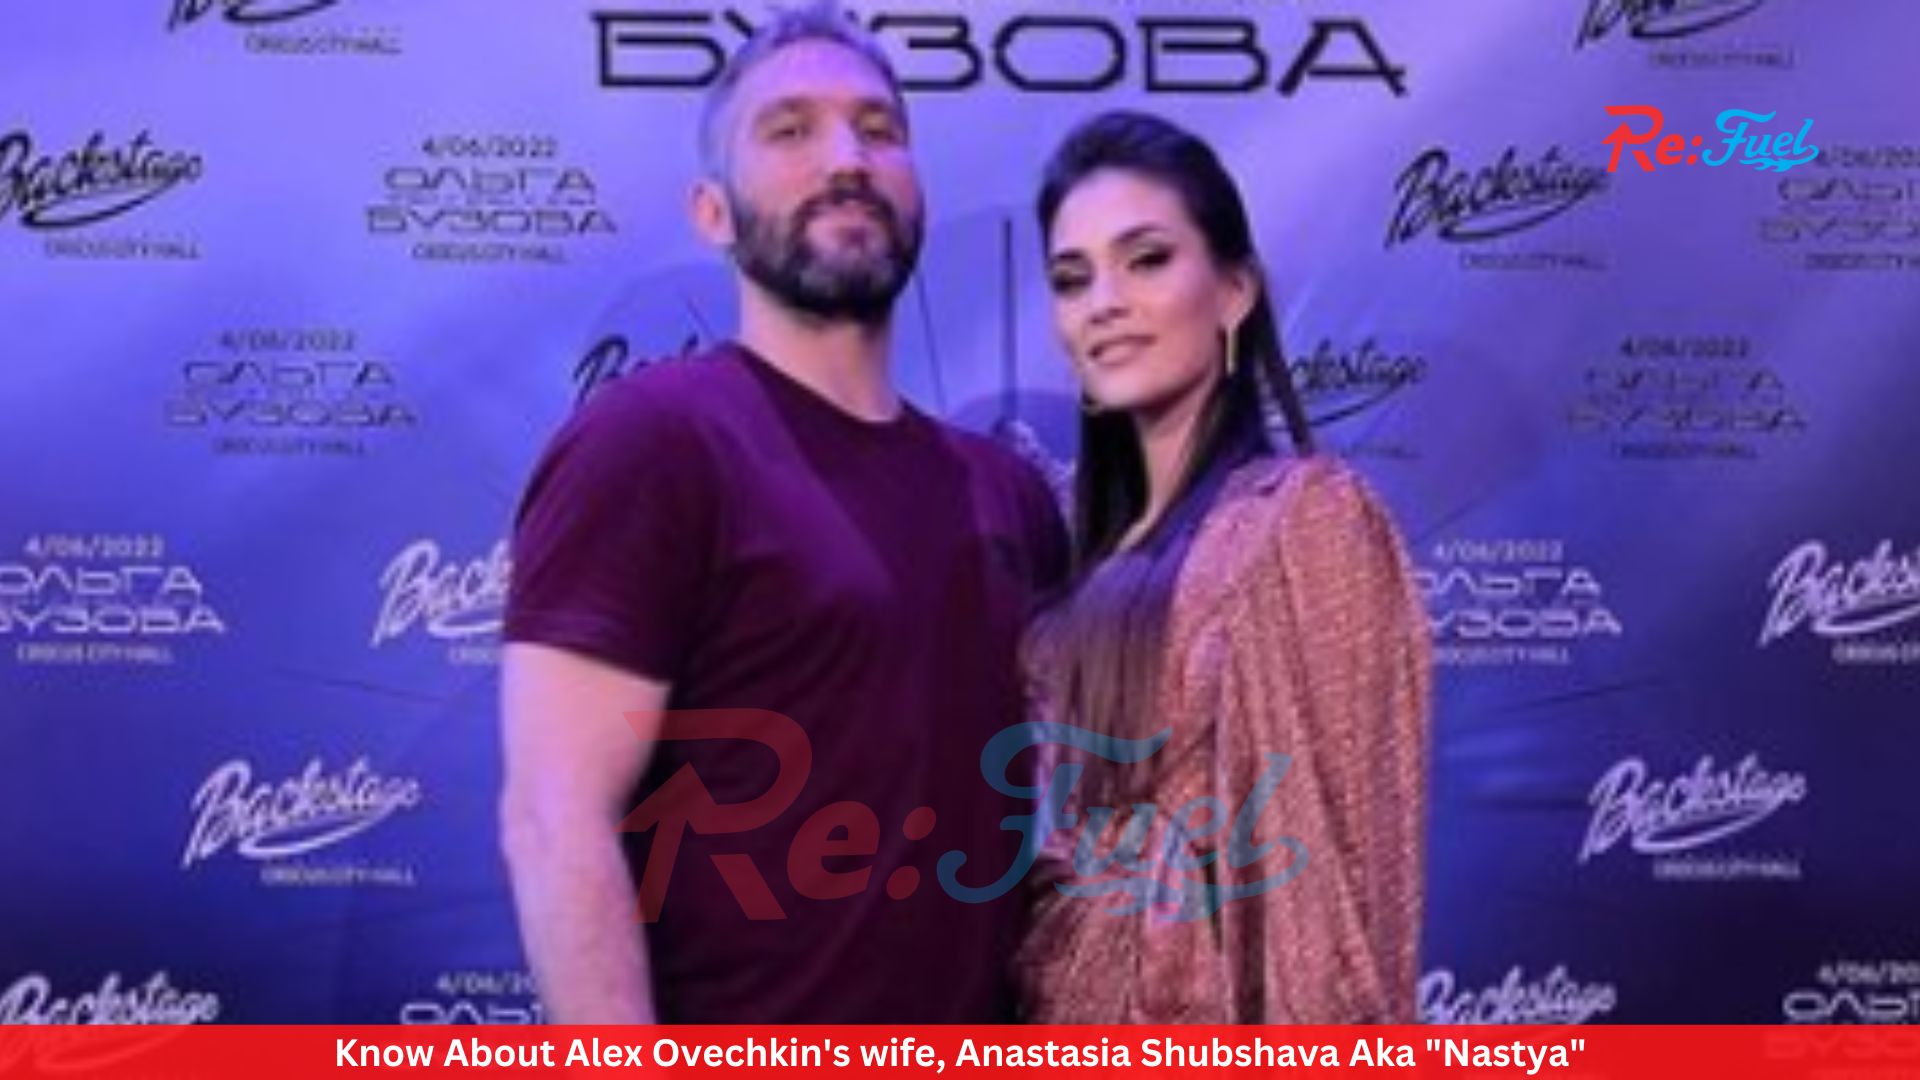 Know About Alex Ovechkin's wife, Anastasia Shubshava Aka "Nastya"